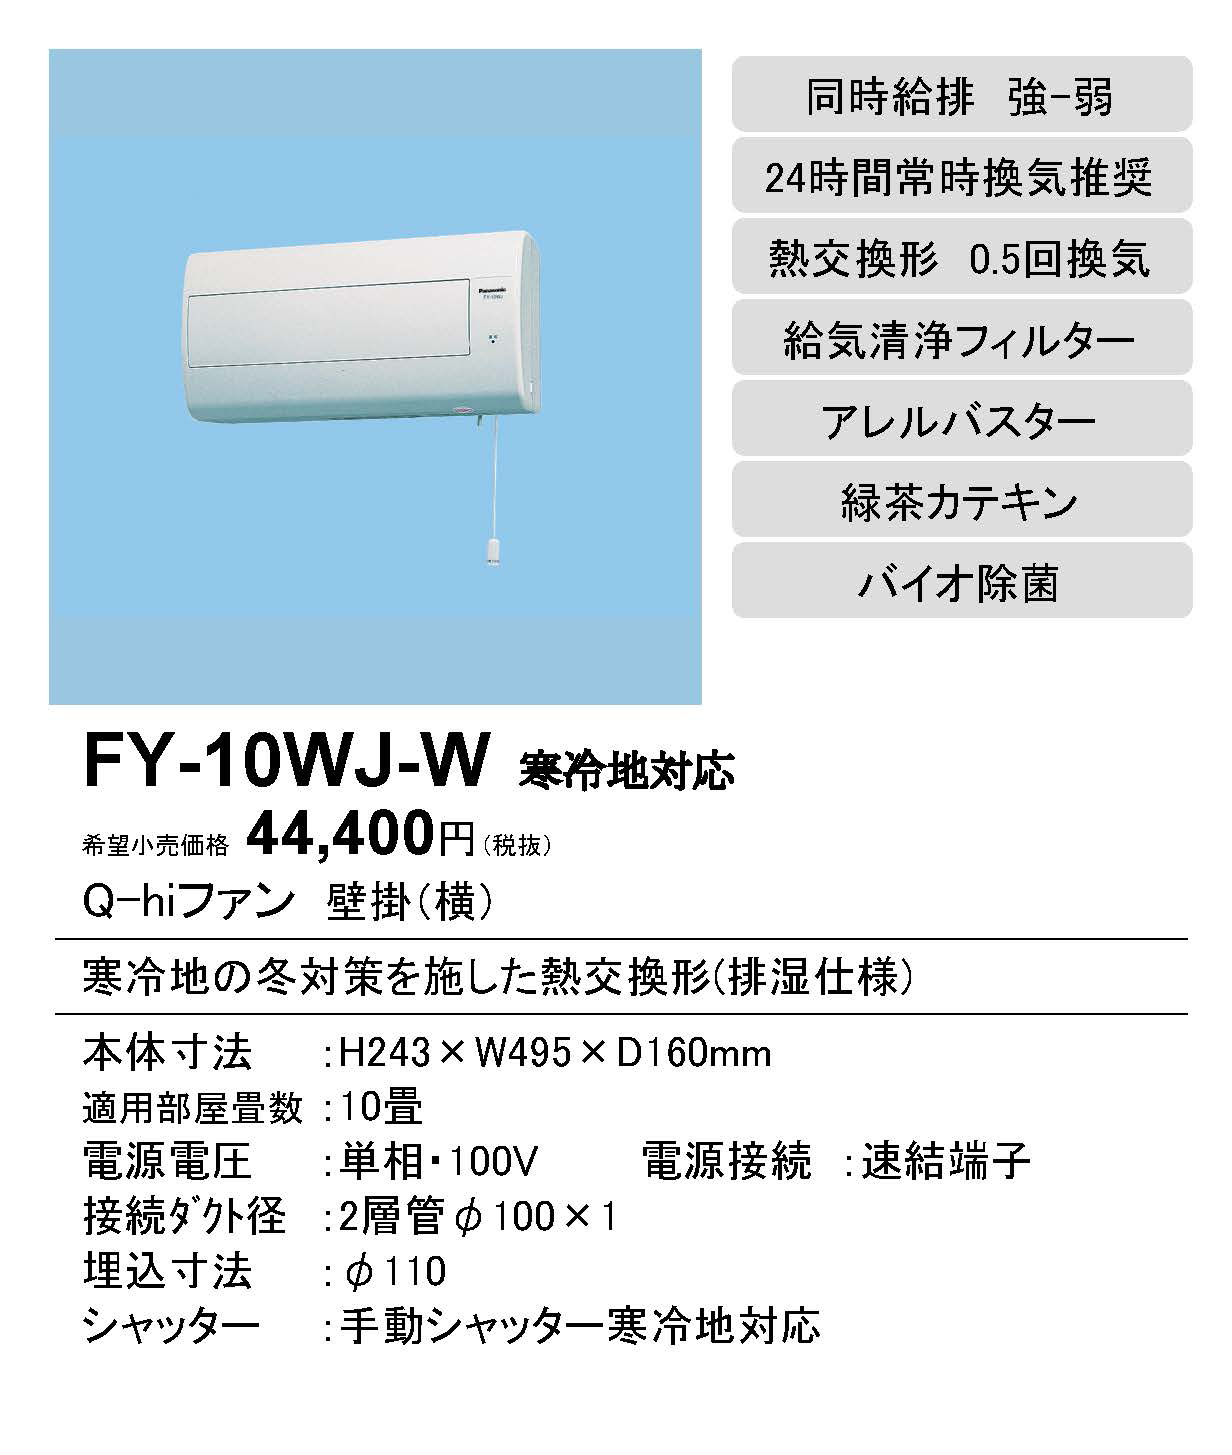 FY-10WJ-W 換気扇 パナソニック Panasonic Q-hiファン壁掛形・1パイプ方式 熱交換形 寒冷地用居室用 排湿形(0.5回/h  換気用)10畳用 24時間常時換気推奨 強制同時給排 強・弱 手動式シャッター タカラショップ